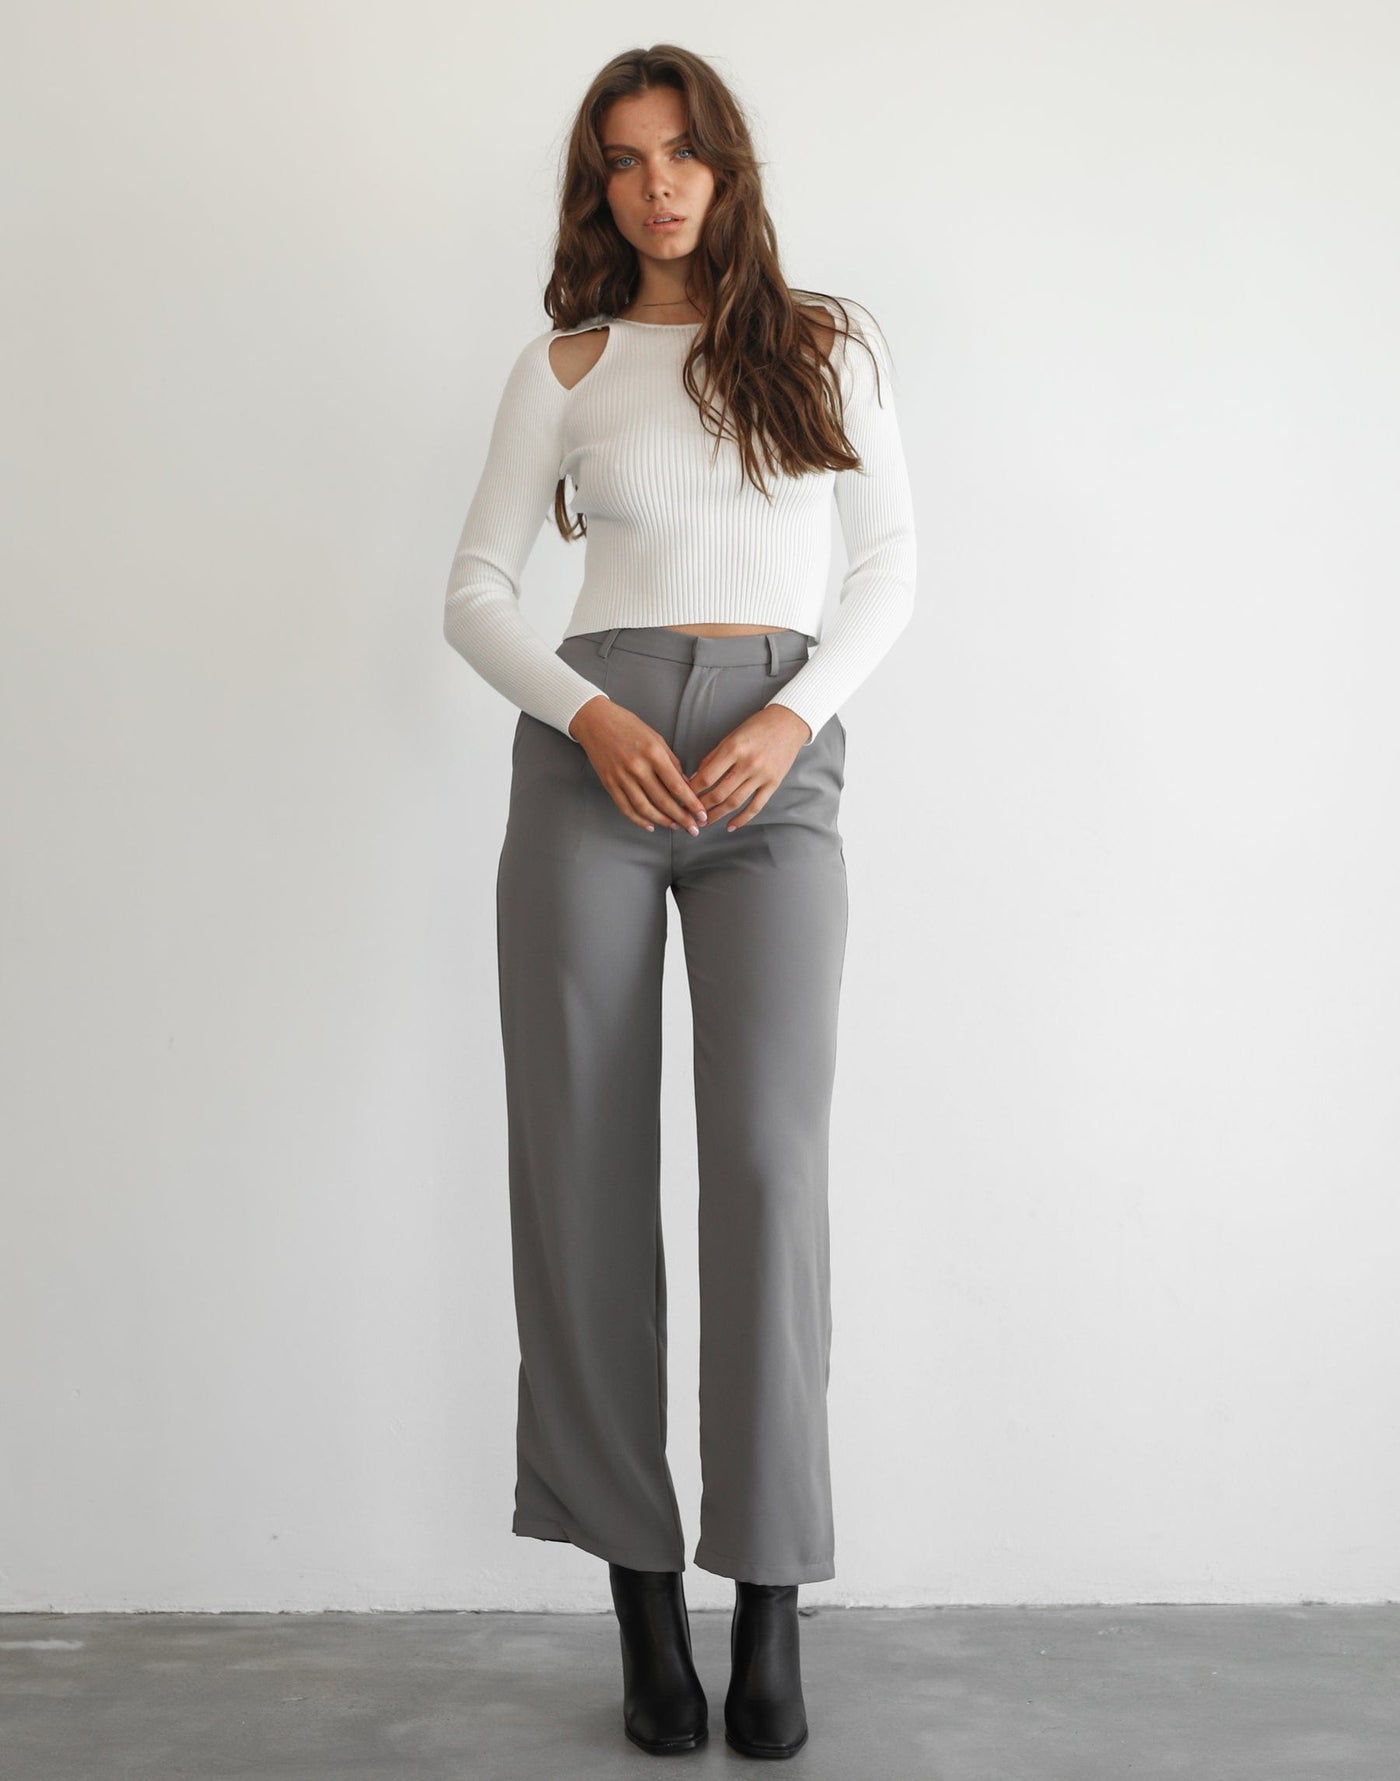 Celeste Long Sleeve Top (White) - White Long Sleeve Top - Women's Tops - Charcoal Clothing